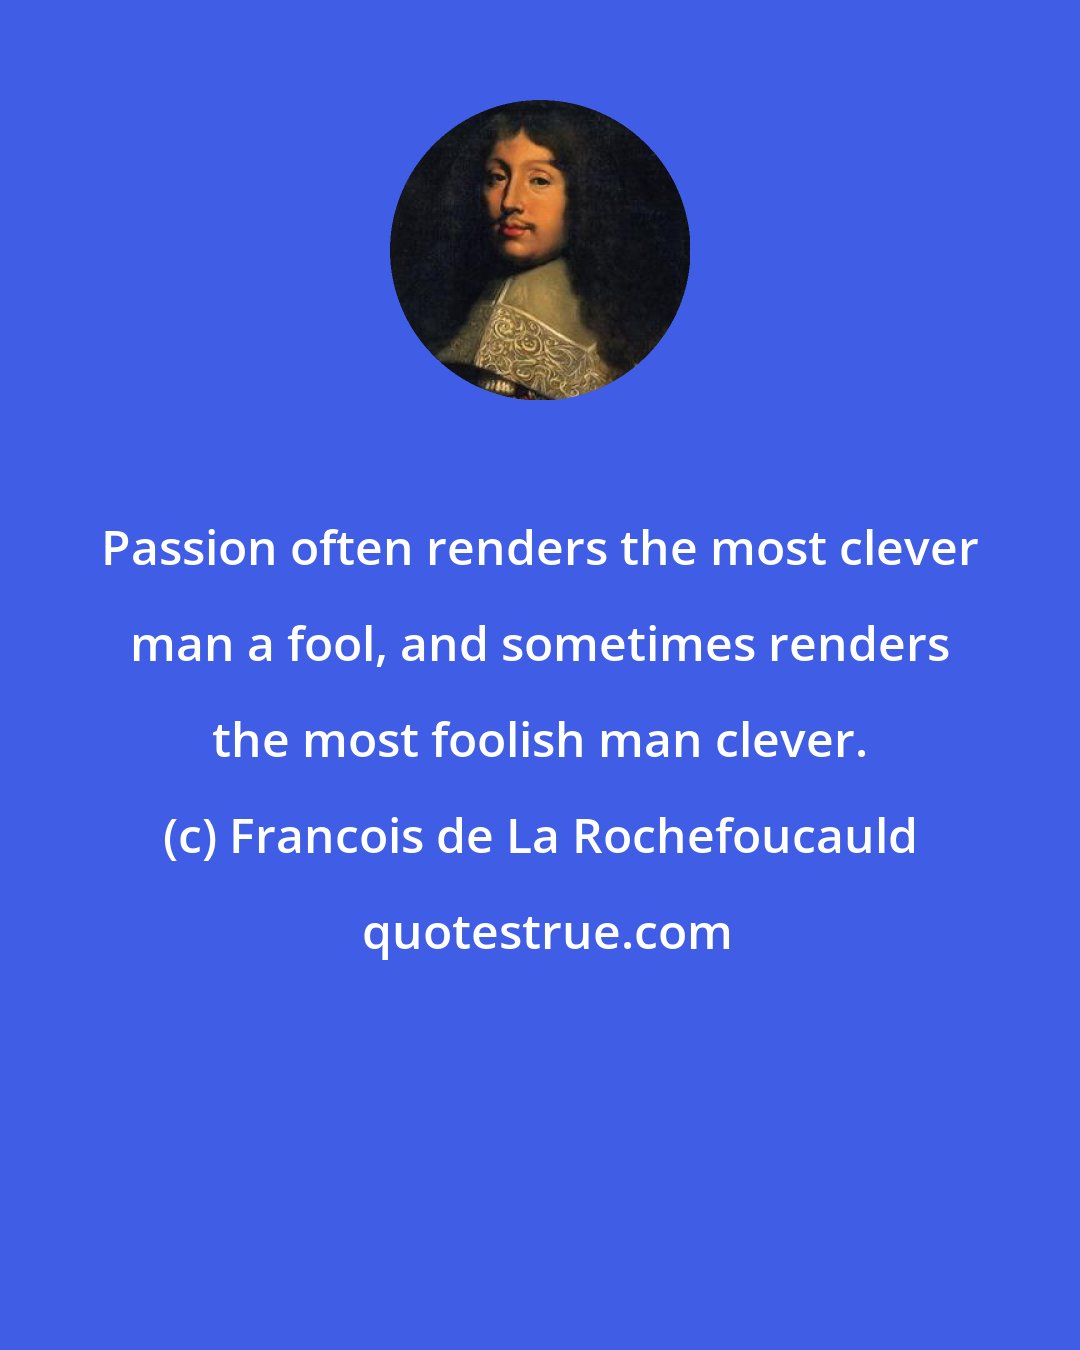 Francois de La Rochefoucauld: Passion often renders the most clever man a fool, and sometimes renders the most foolish man clever.